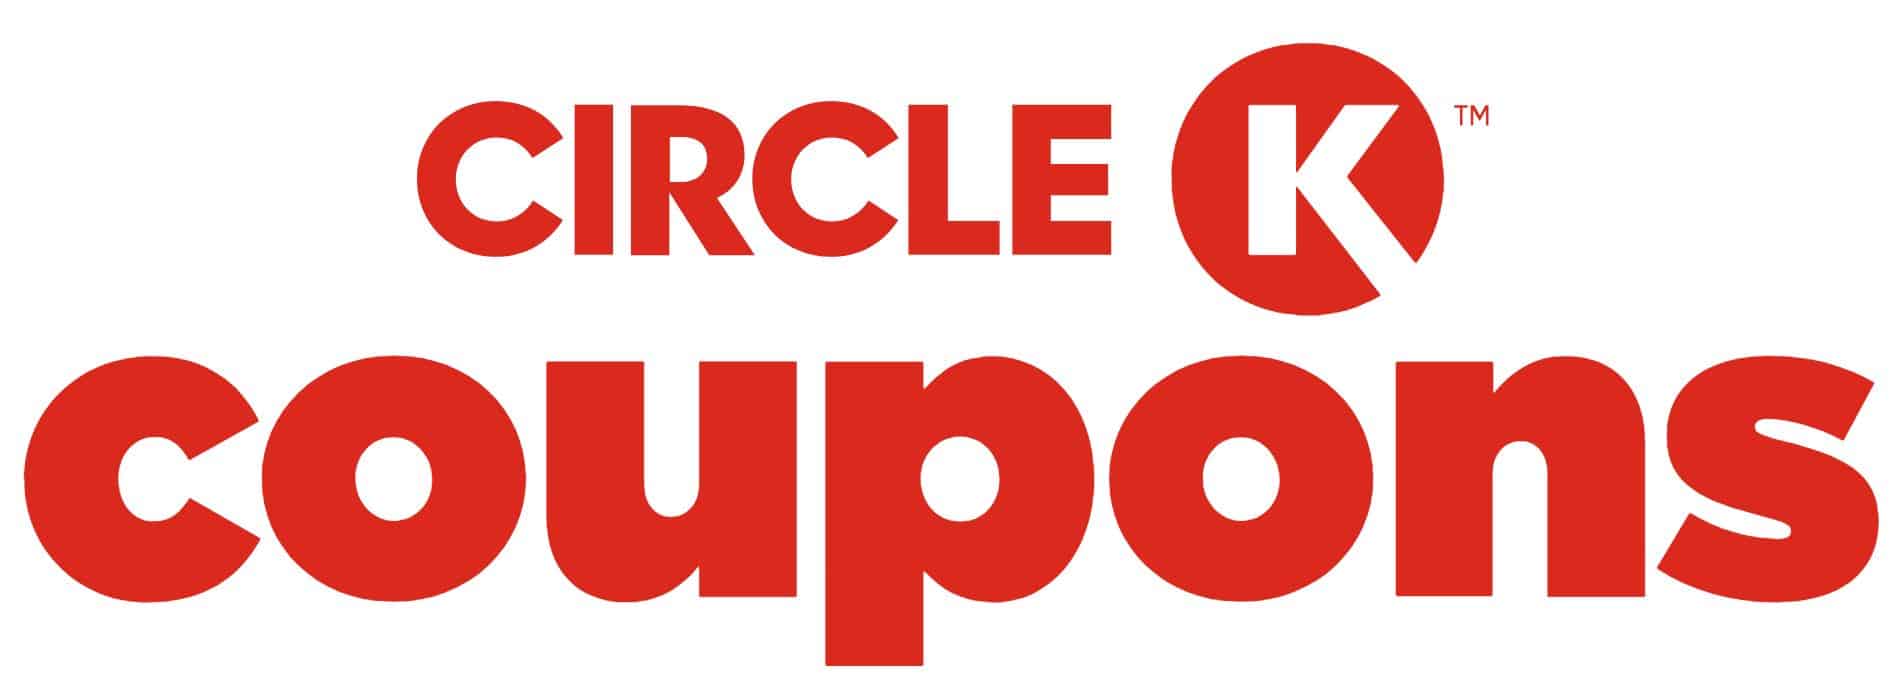 Circle K coupons